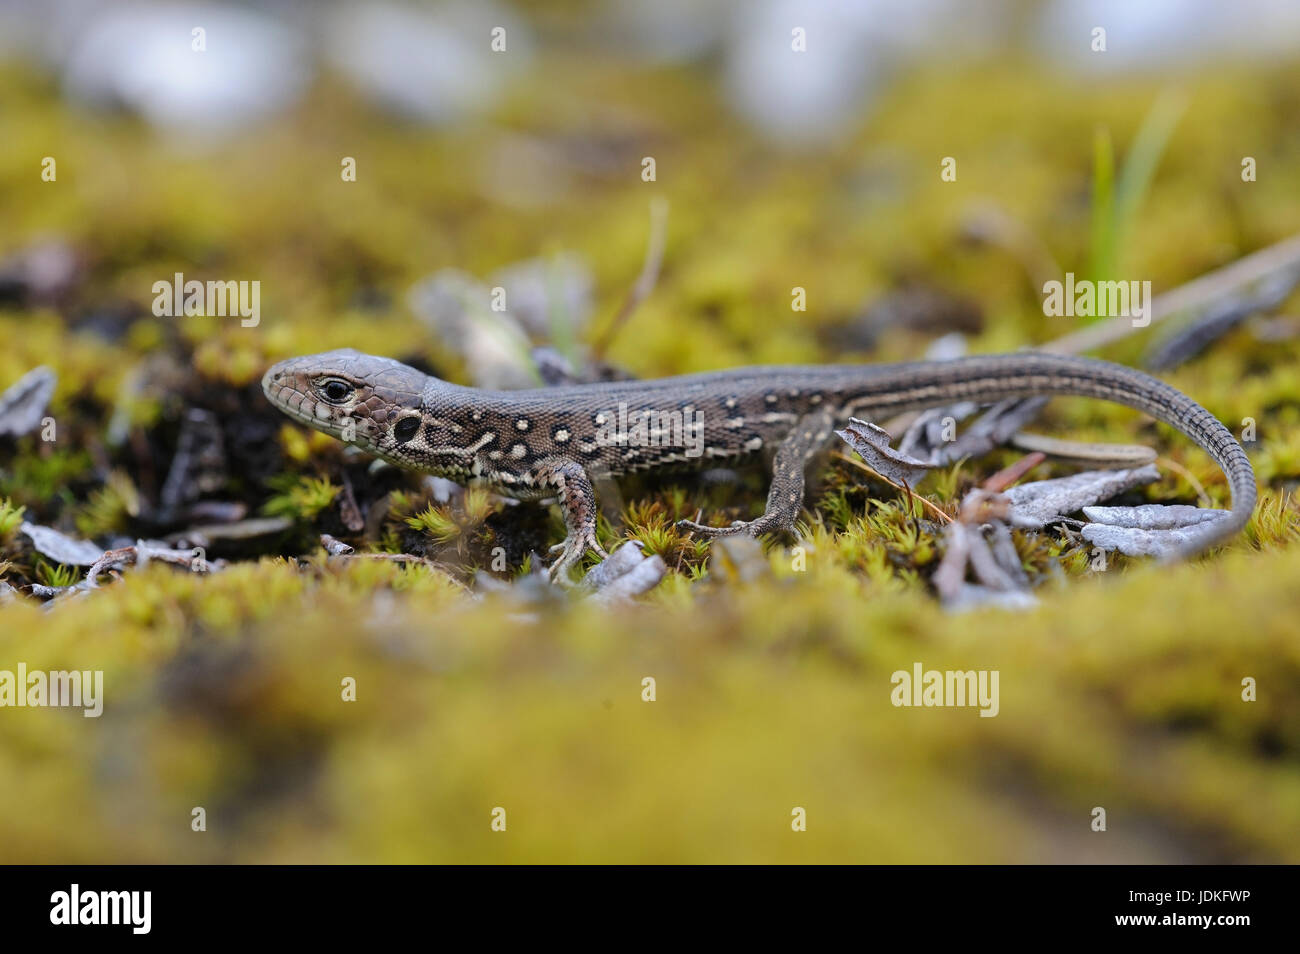 Young fence lizard sits on moss, Junge Zauneidechse sitzt auf Moos Stock Photo